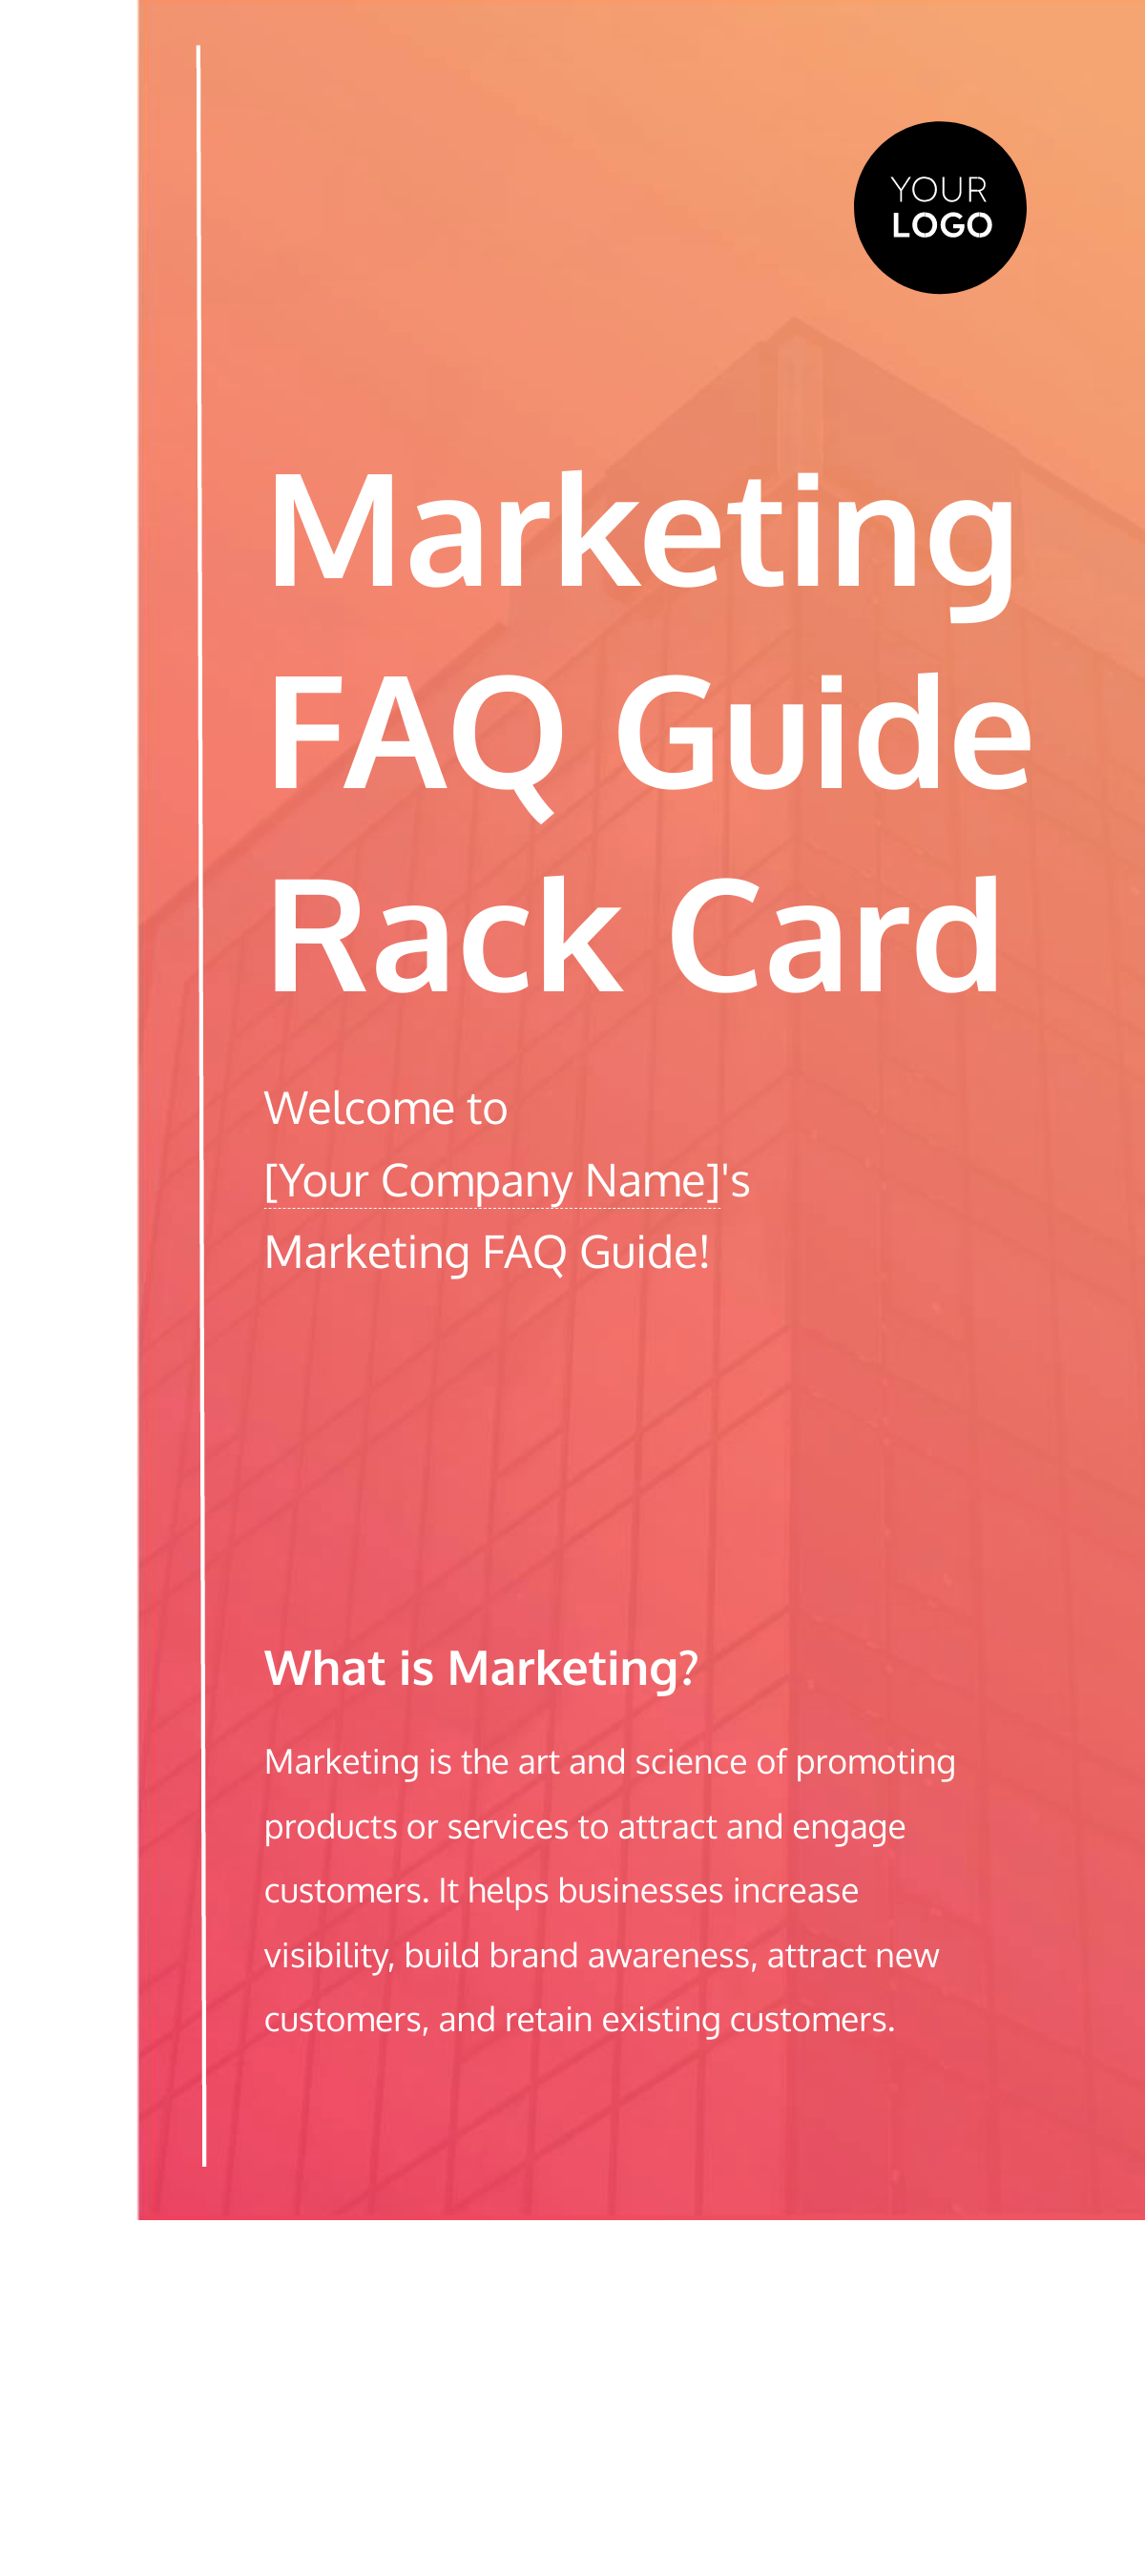 Marketing FAQ Guide Rack Card